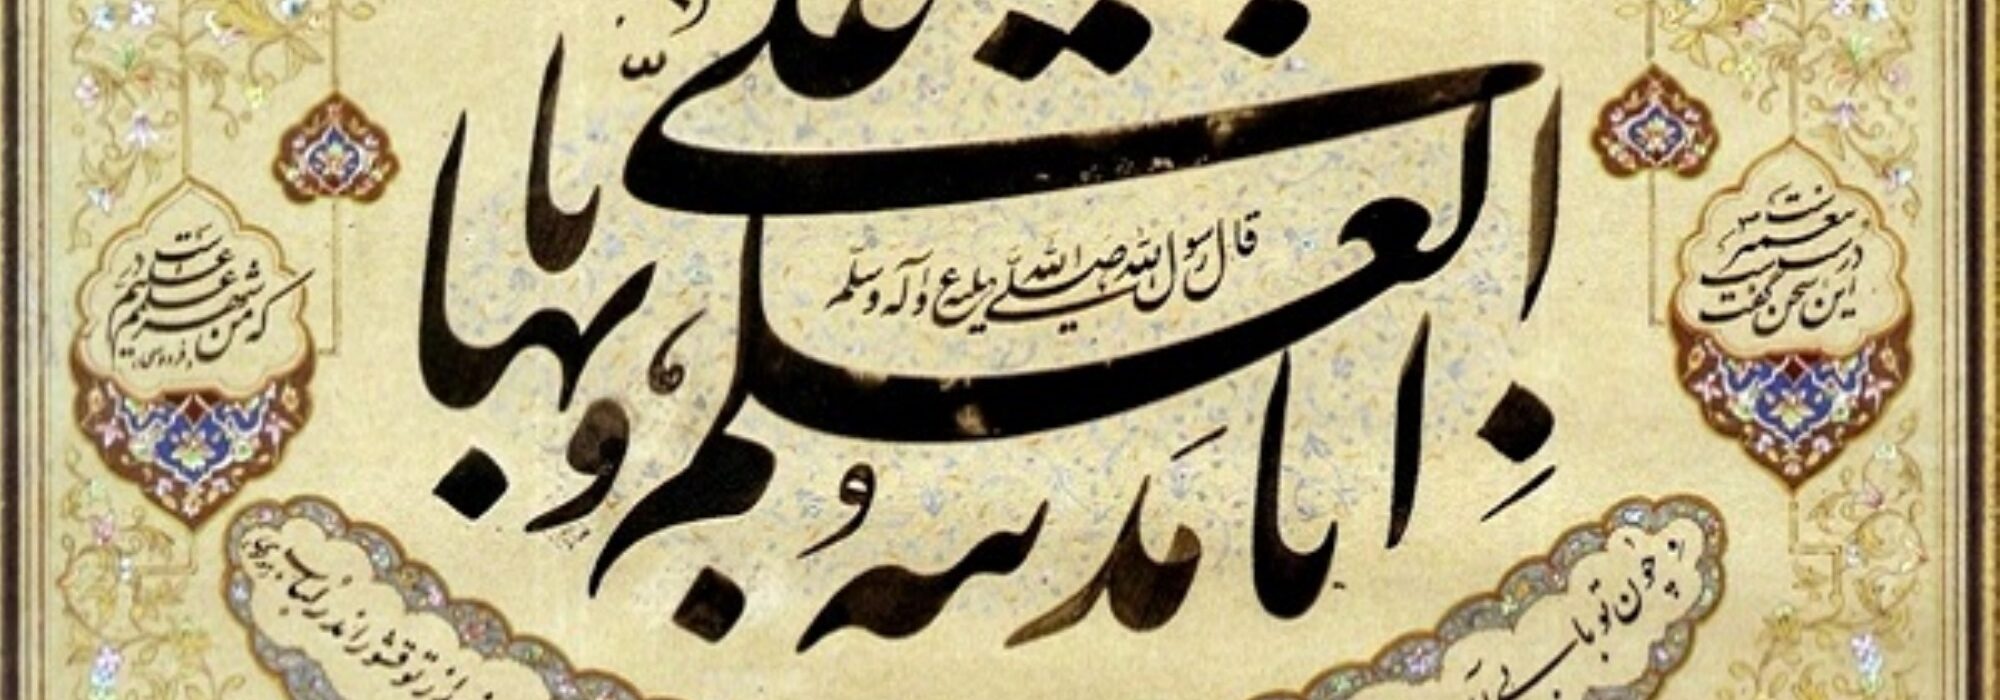 Imagem: caligrafia árabe (Ibn Muqla Center for Arabic Calligraphy)